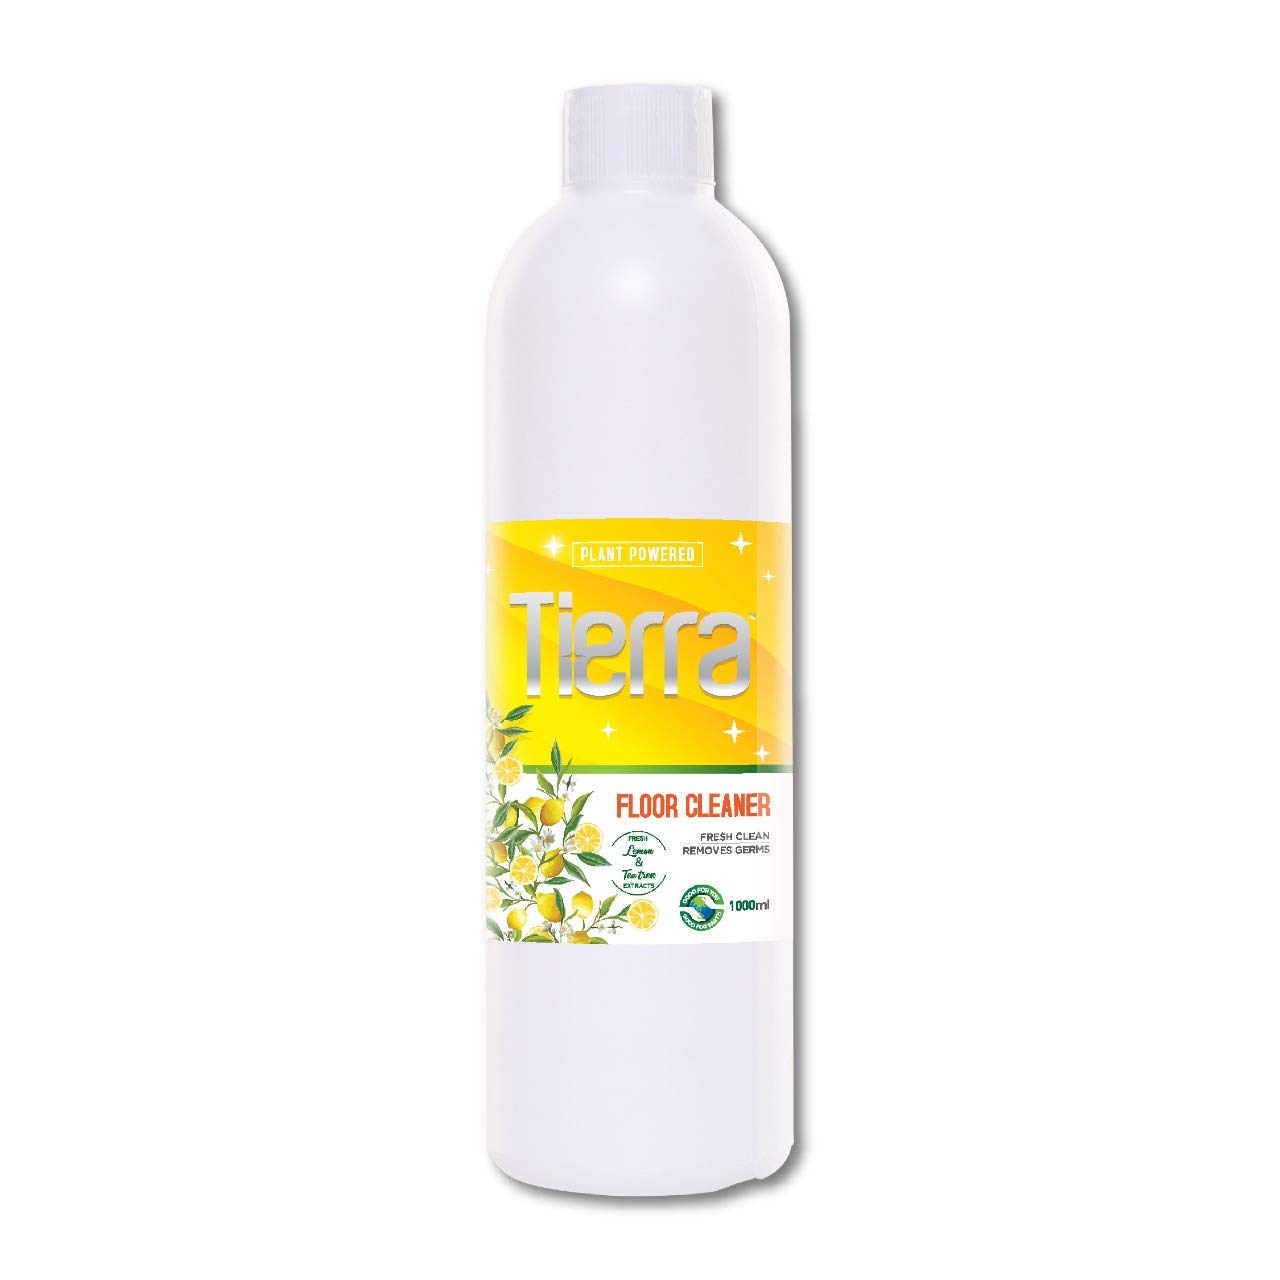 EQA TERA - Nice Vim Cleaner Lemon Fresh 500gm